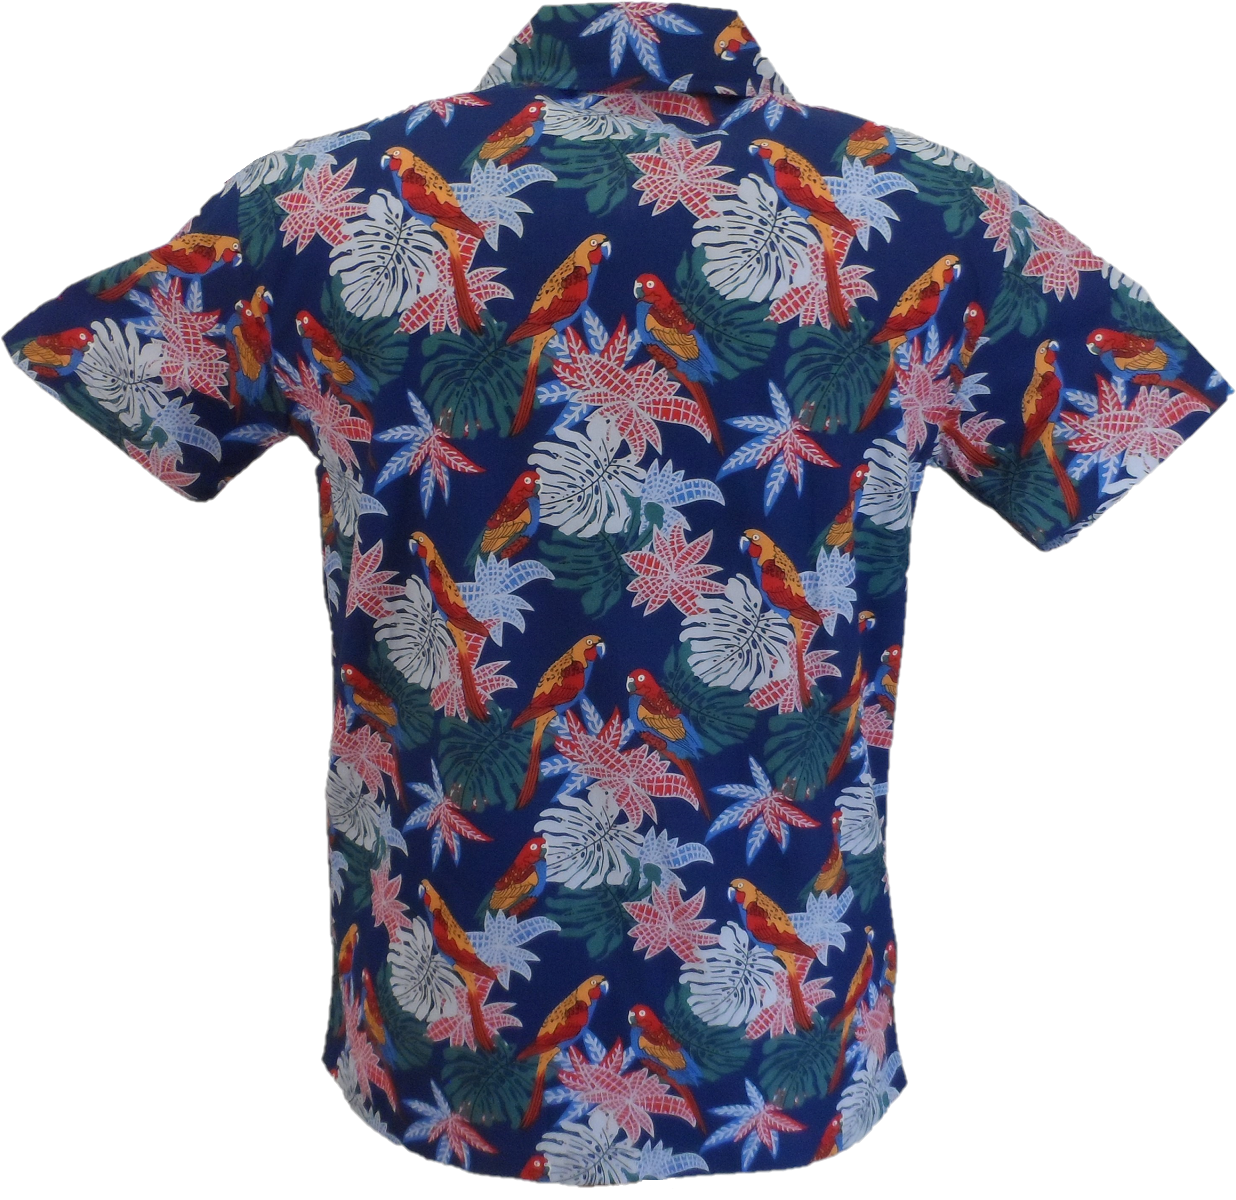 Relco camisa hawaiana retro loro azul para hombre